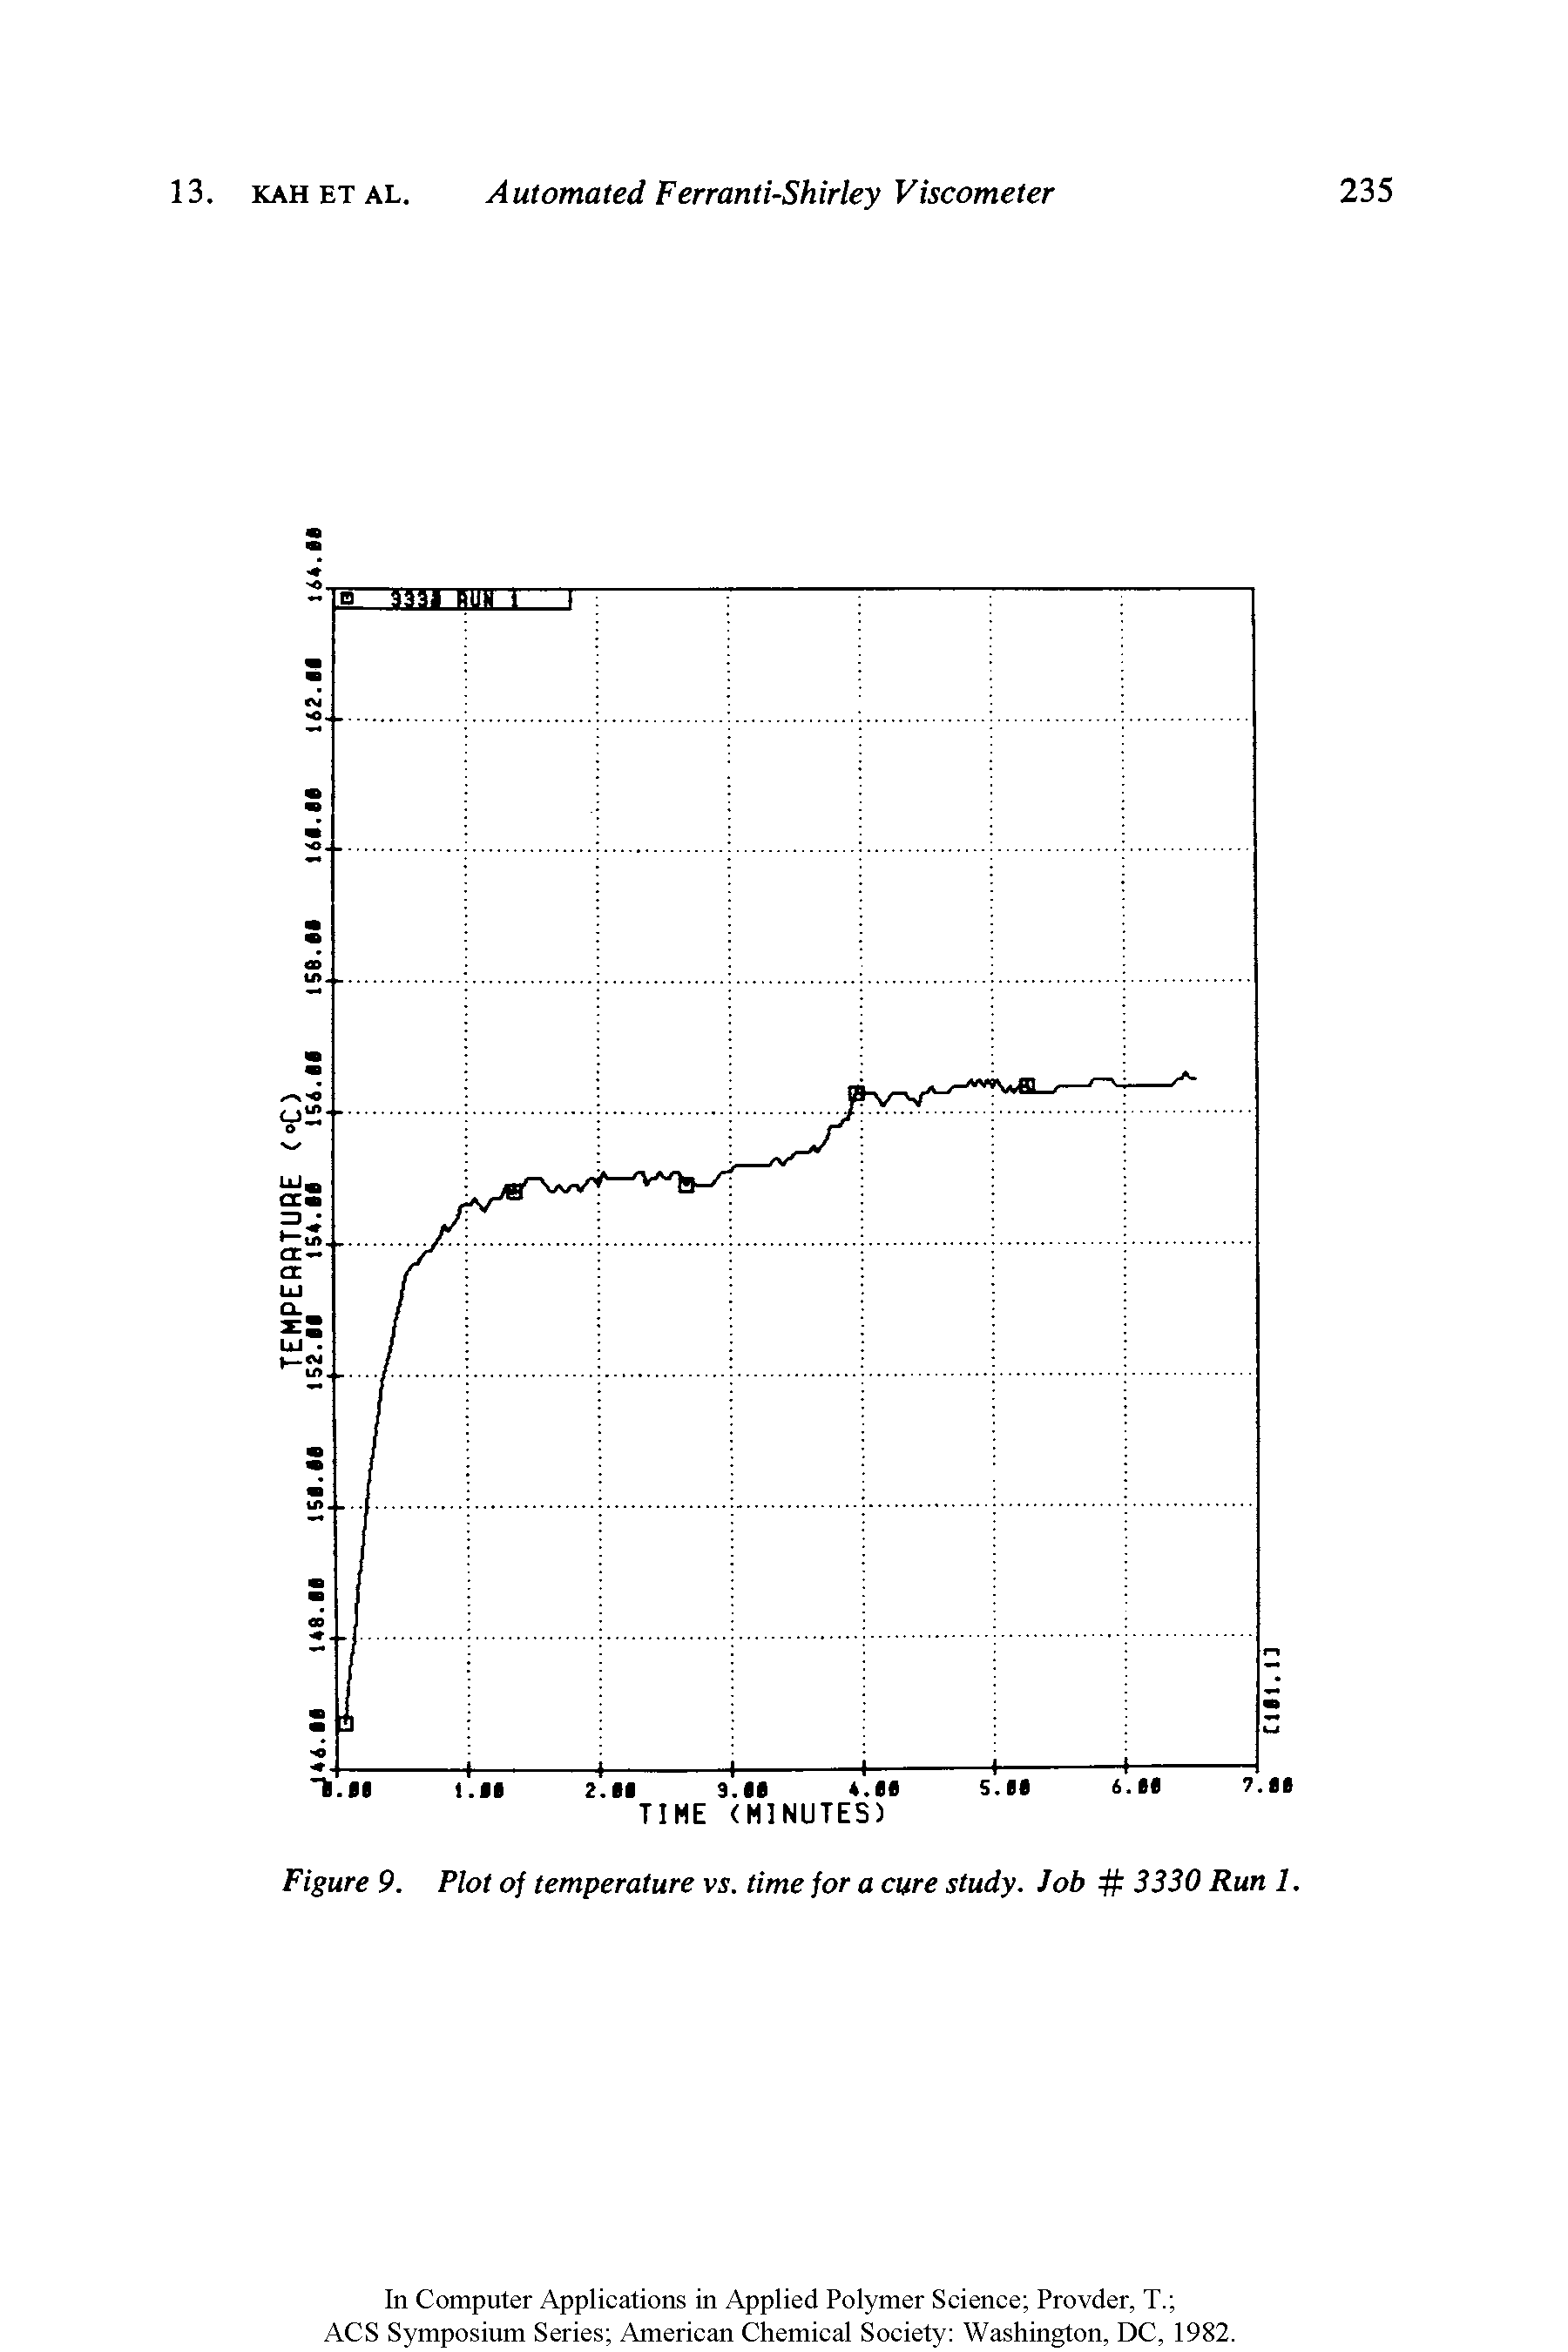 Figure 9. Plot of temperature vs. time for a cure study. Job 3330 Run 1.